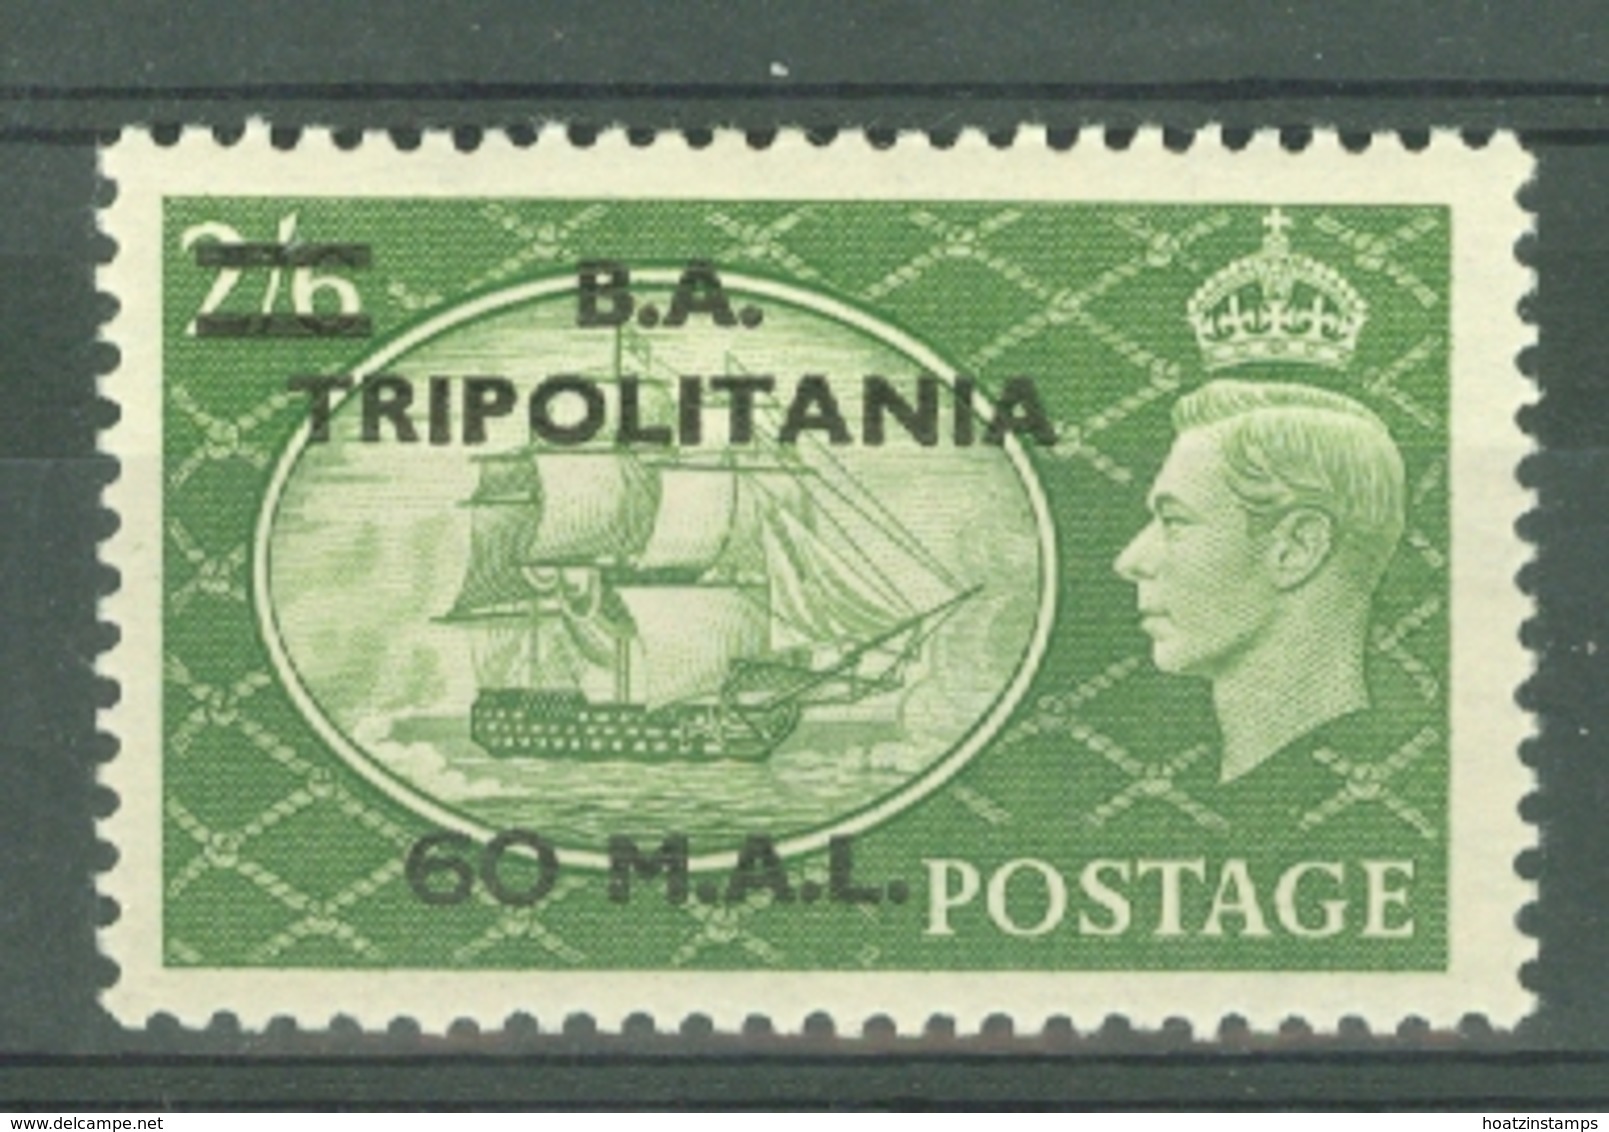 Tripolitania: 1951   KGVI 'B. A. Tripolitania' OVPT   SG T32    60l On 2/6d    MH - Tripolitania